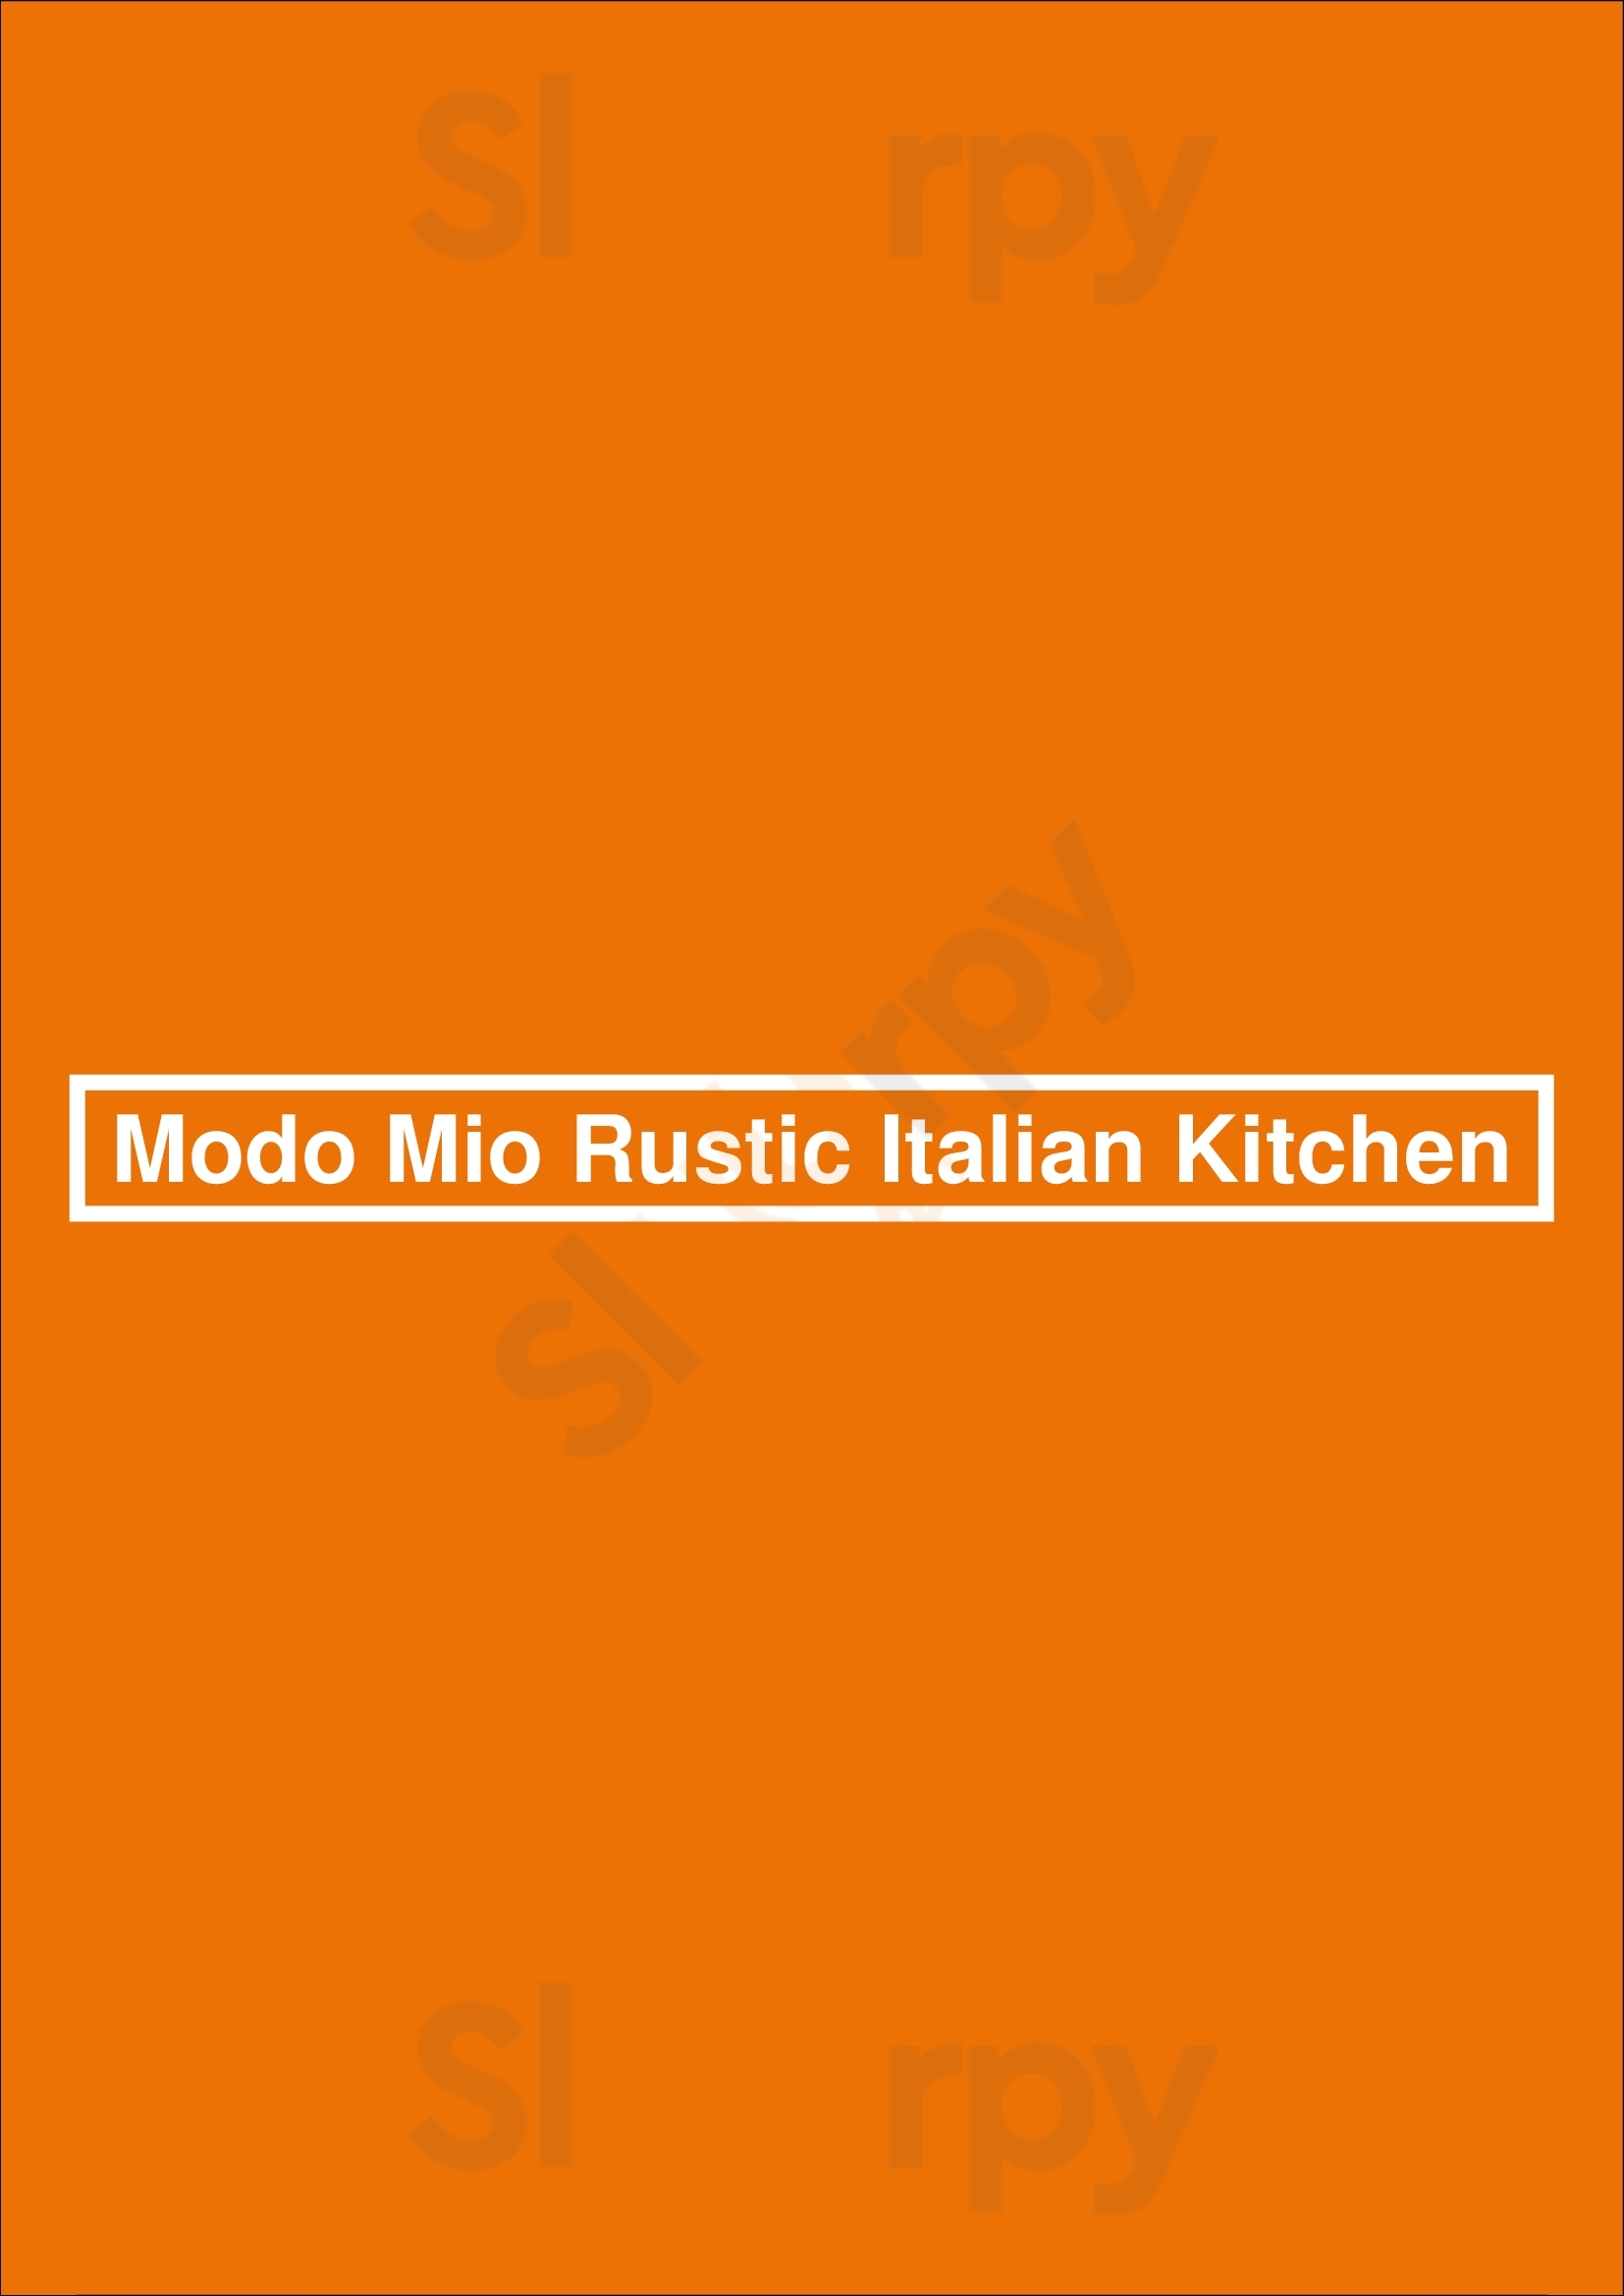 Modo Mio Rustic Italian Kitchen Newport Beach Menu - 1